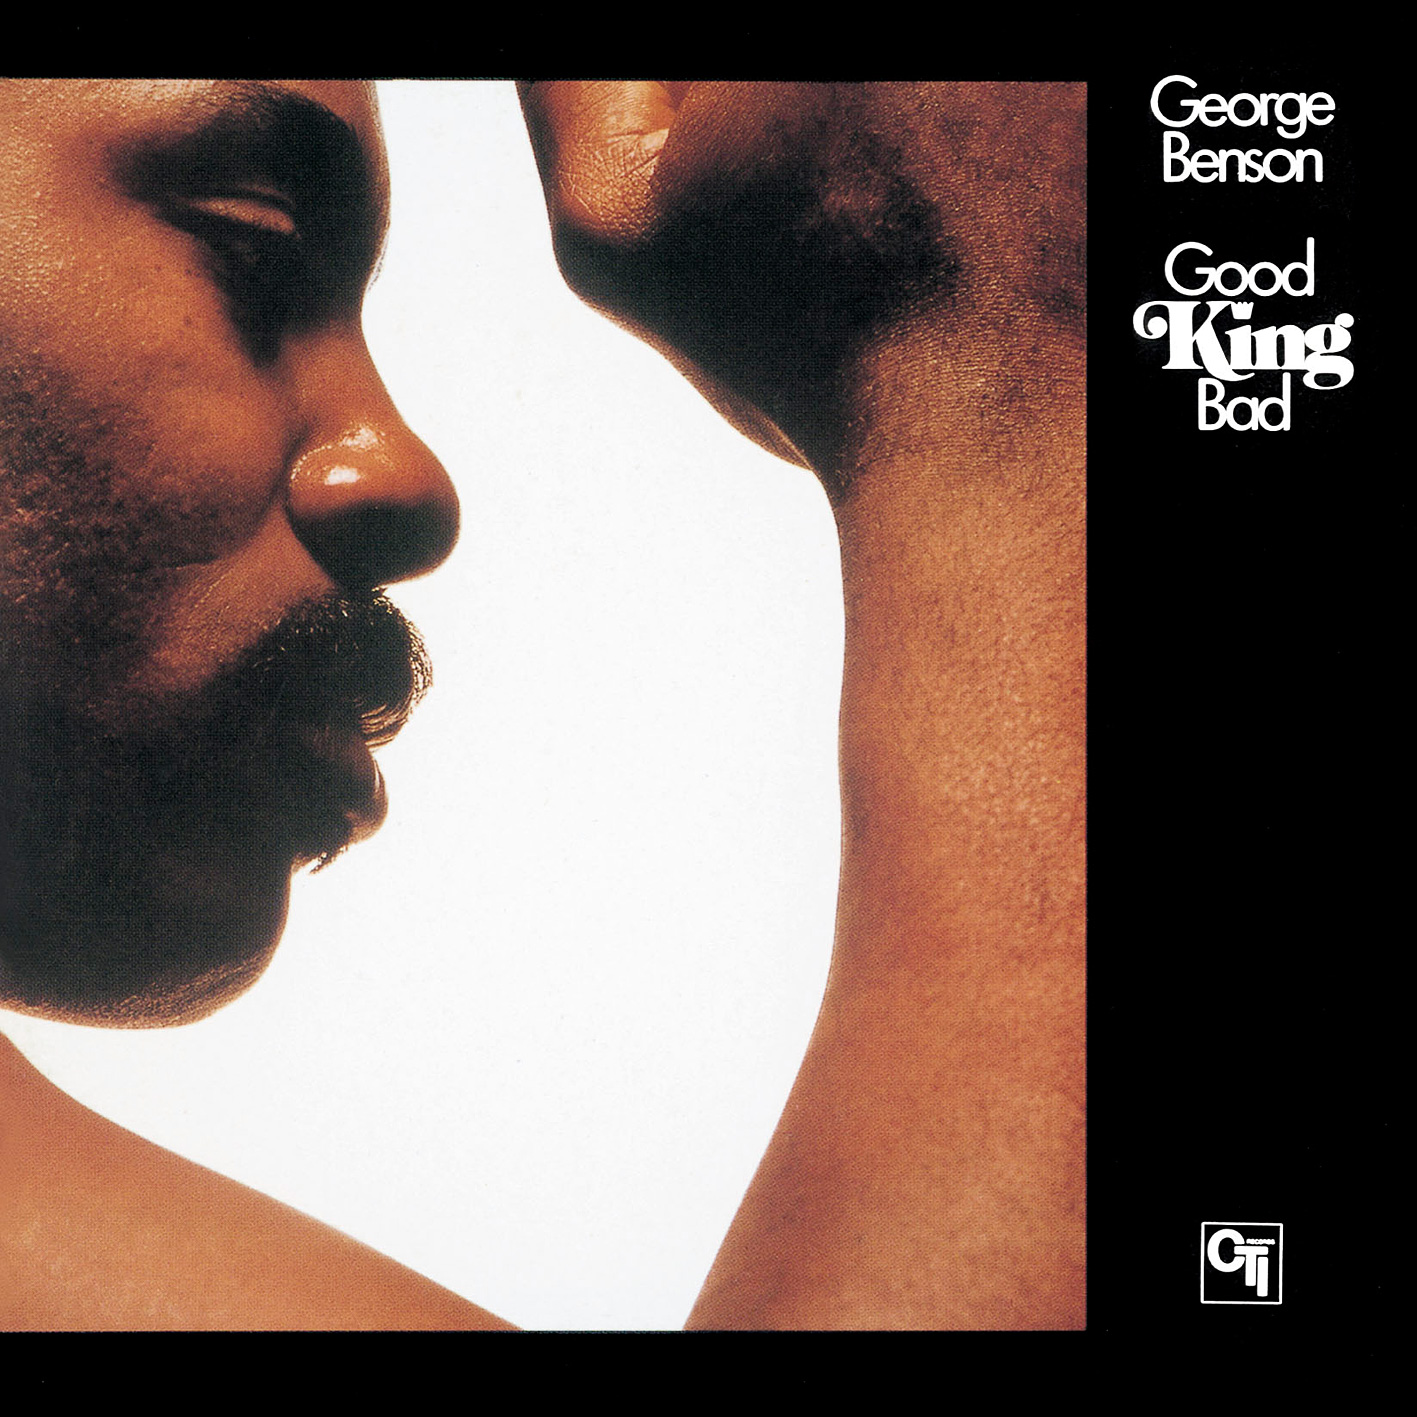 George Benson – Good Kind Bad (1976/2013) SACD ISO + Hi-Res FLAC